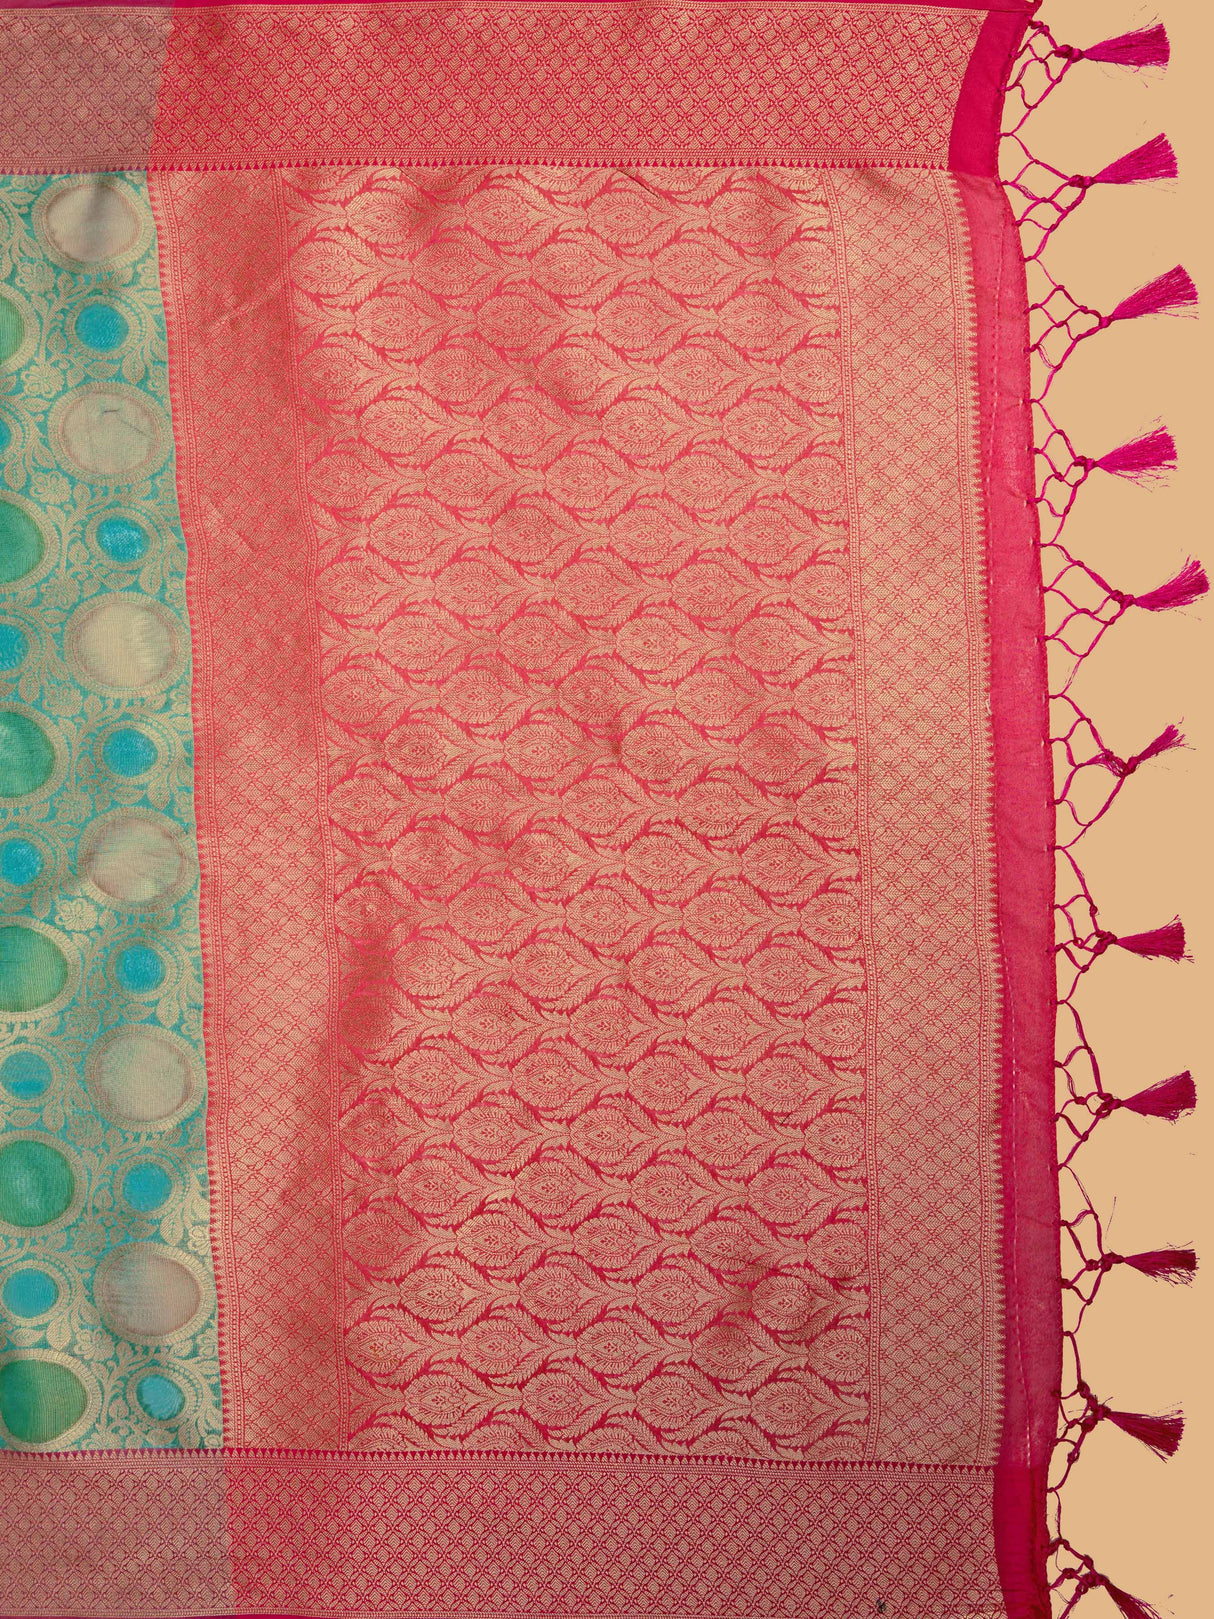 Mimosa Women's Woven Design Banarasi Art Silk Saree With Blouse Piece : SA00001211RMFREE